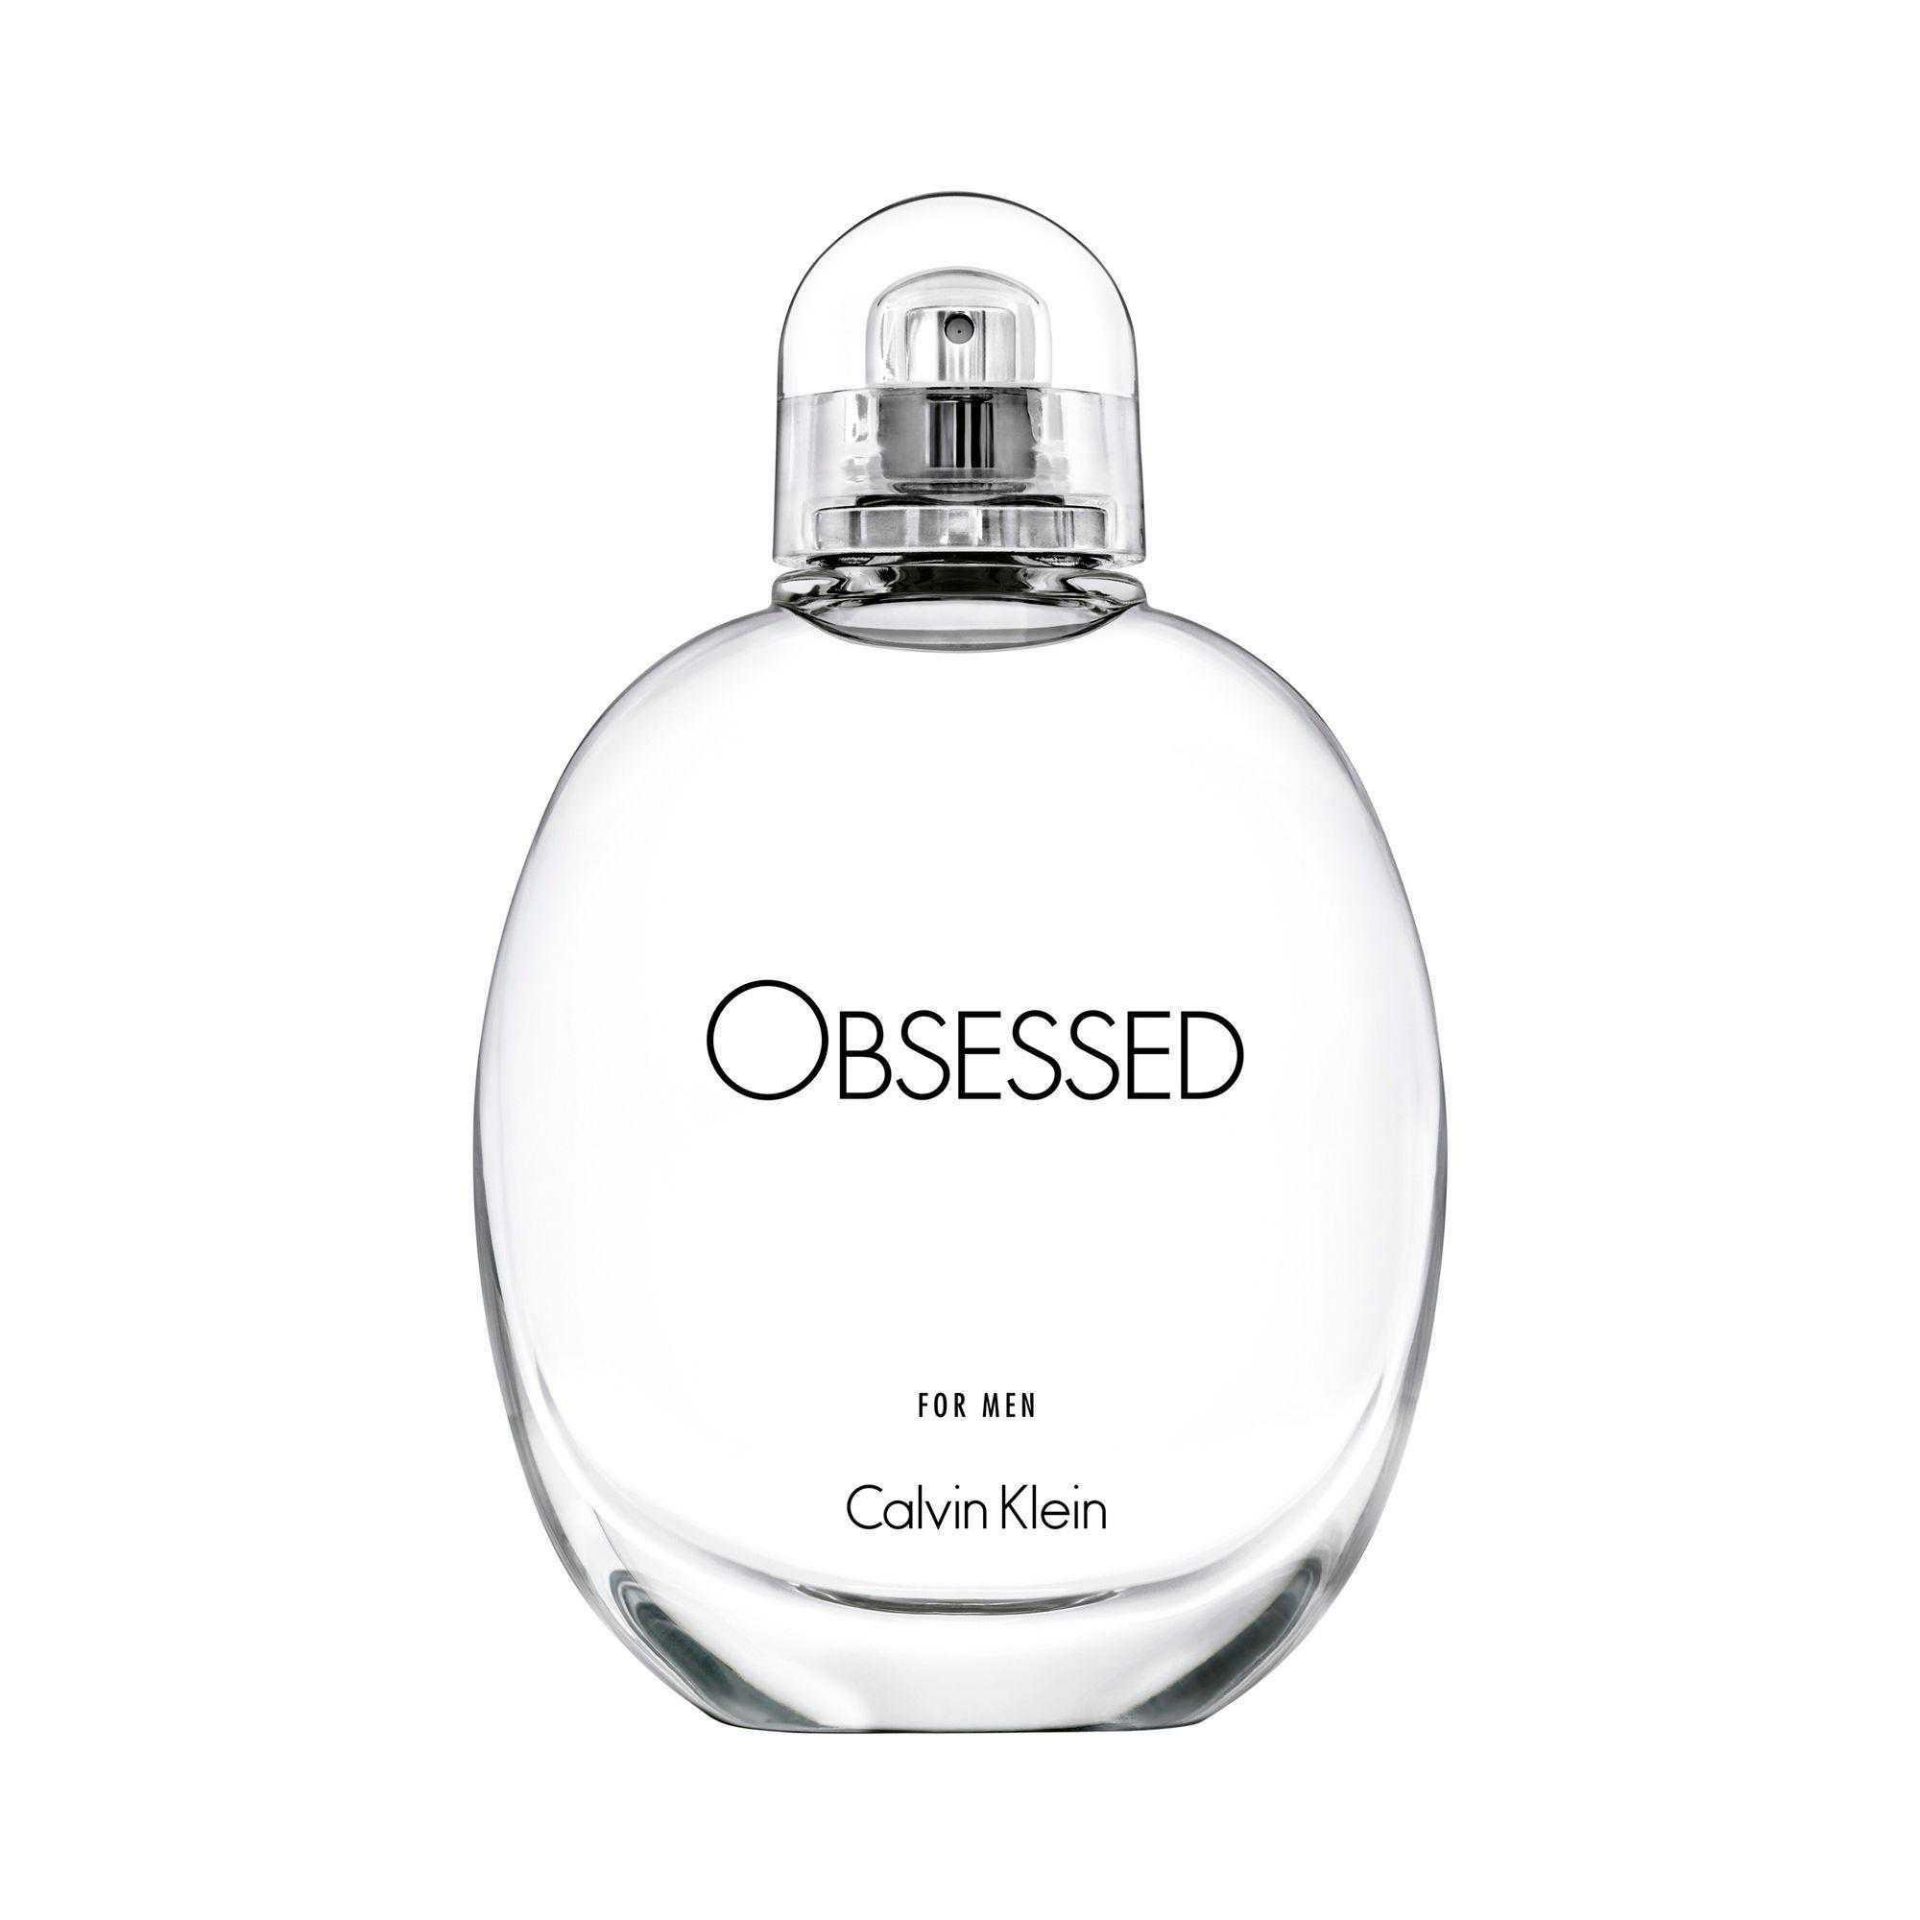 Rrp £80 Unboxed Bottle Of Calvin Klein Obsessed For Women 100Ml Eau De Parfum (Ex Display)